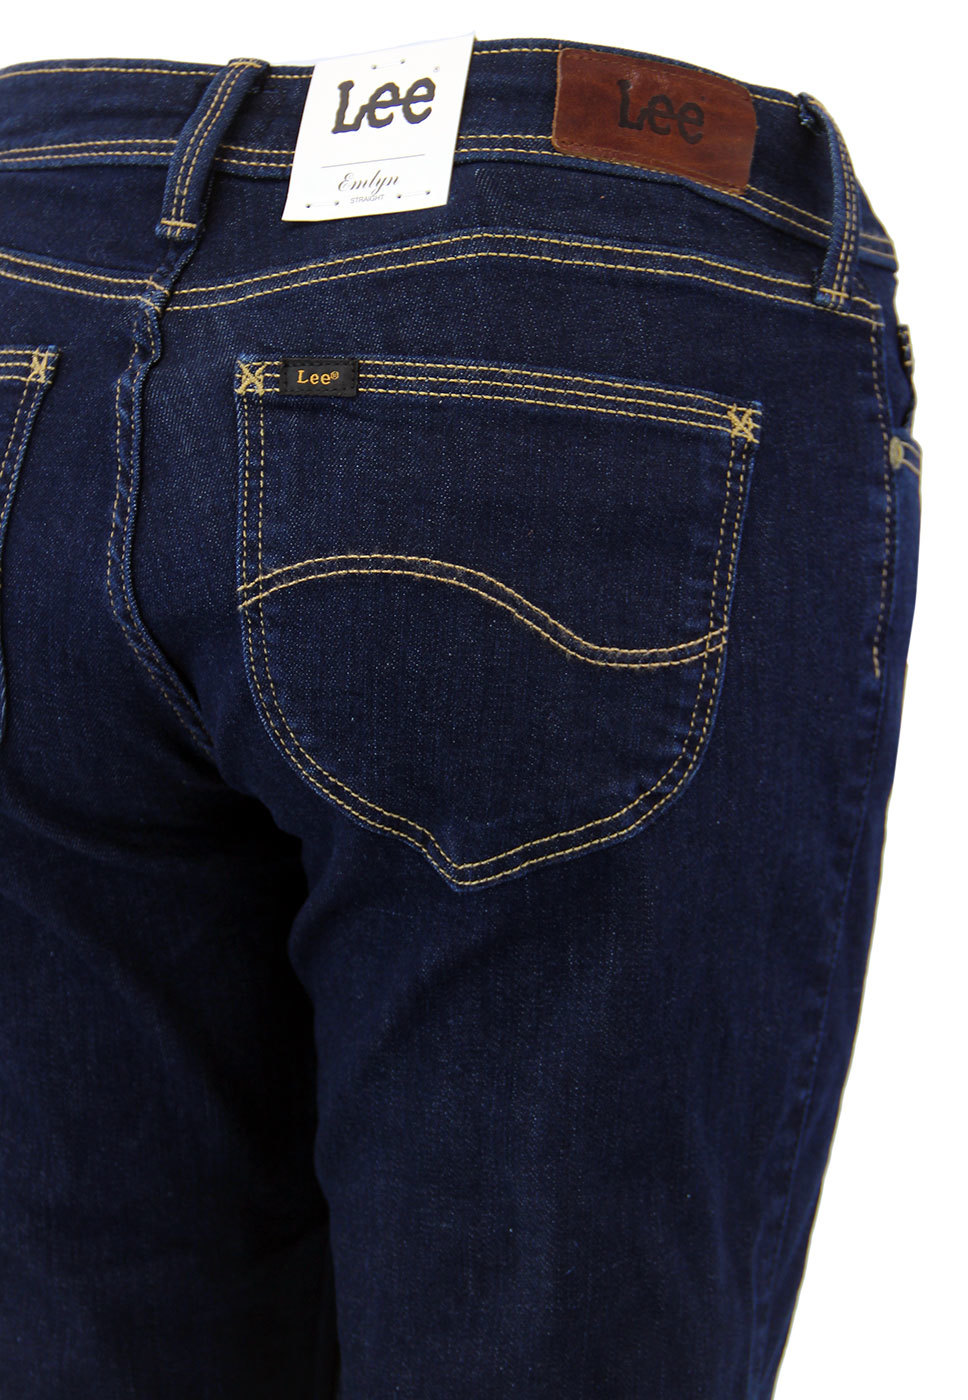 Emlyn LEE Retro Indie Straight Tapered Fit Denim Jeans Solid Blue